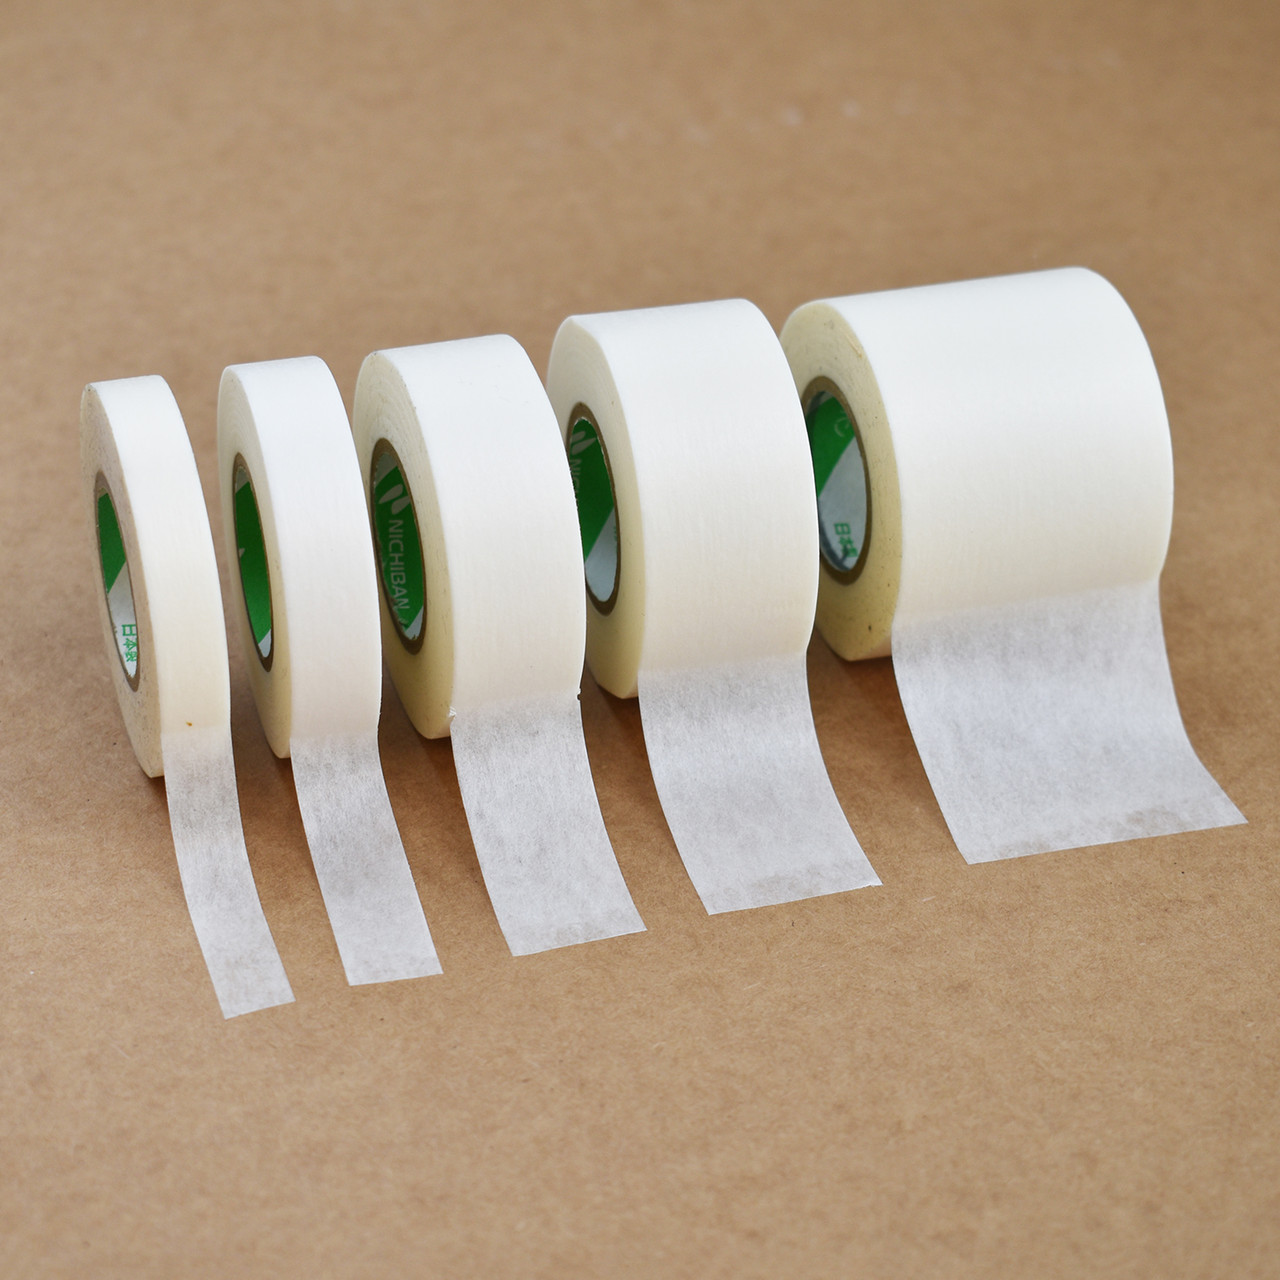 Nichiban #251 White Masking Tape — Soho Art Materials